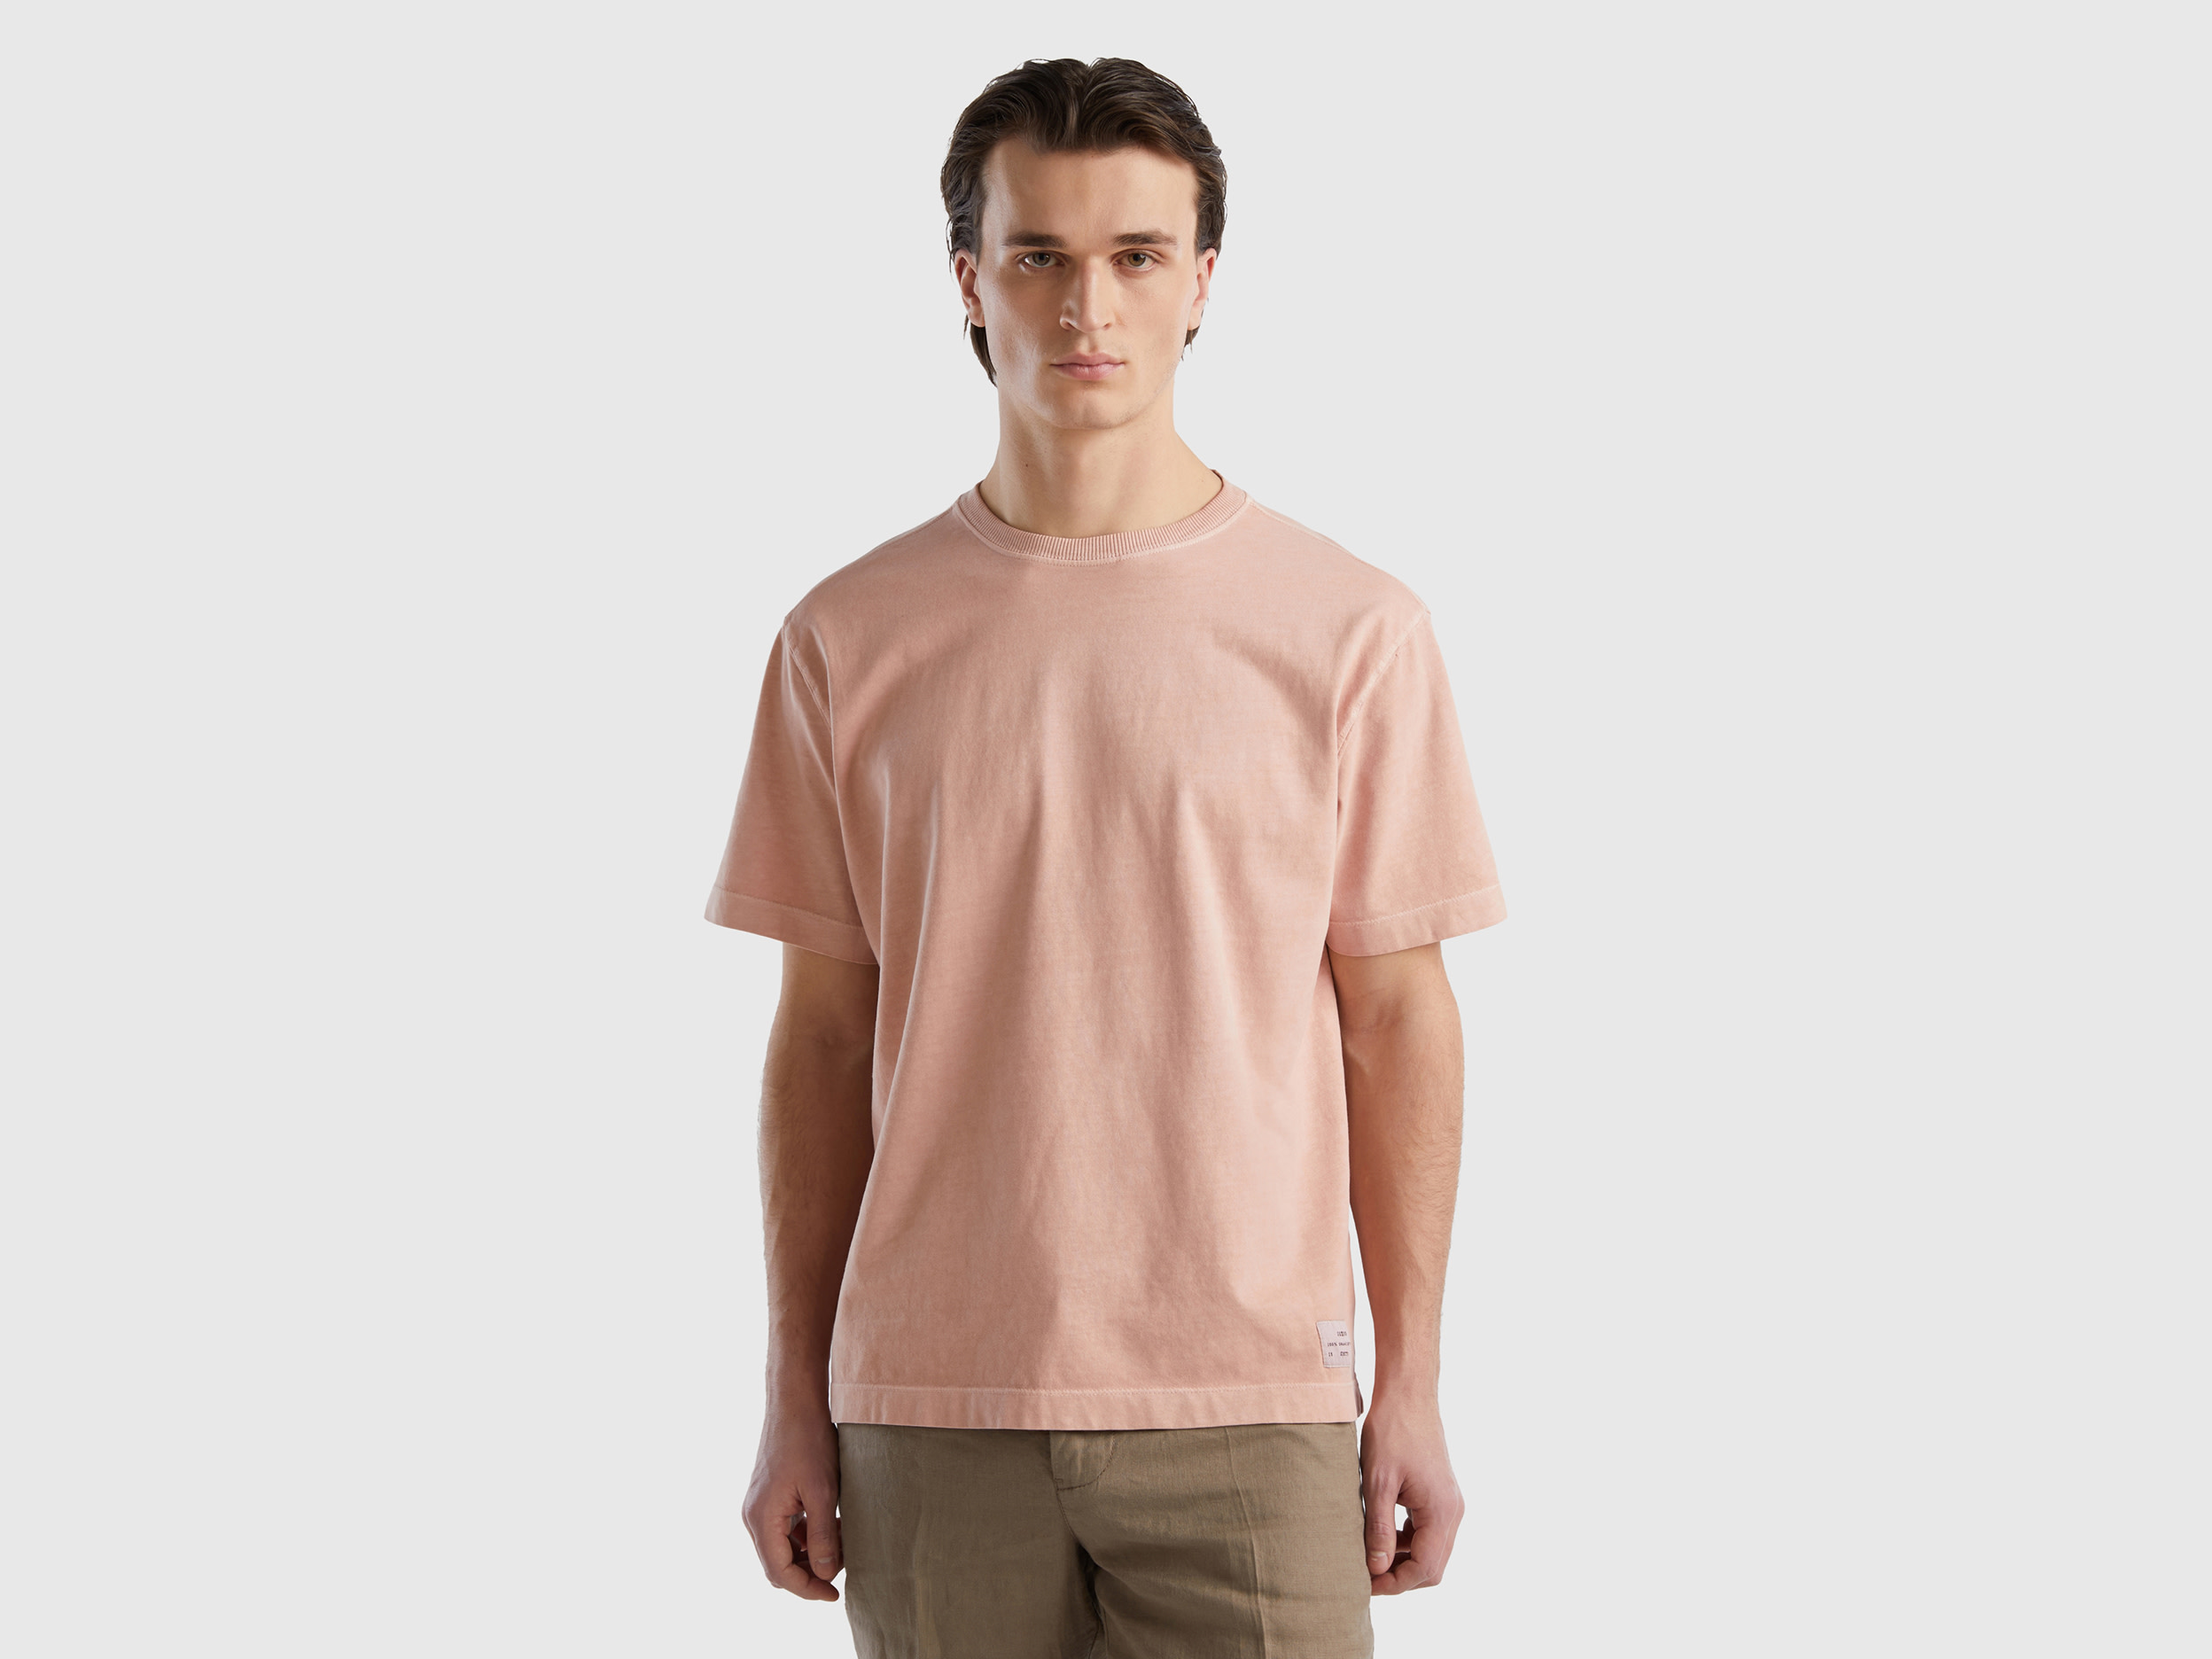 Image of Benetton, 100% Organic Cotton Crew Neck T-shirt, size XXXL, Nude, Men